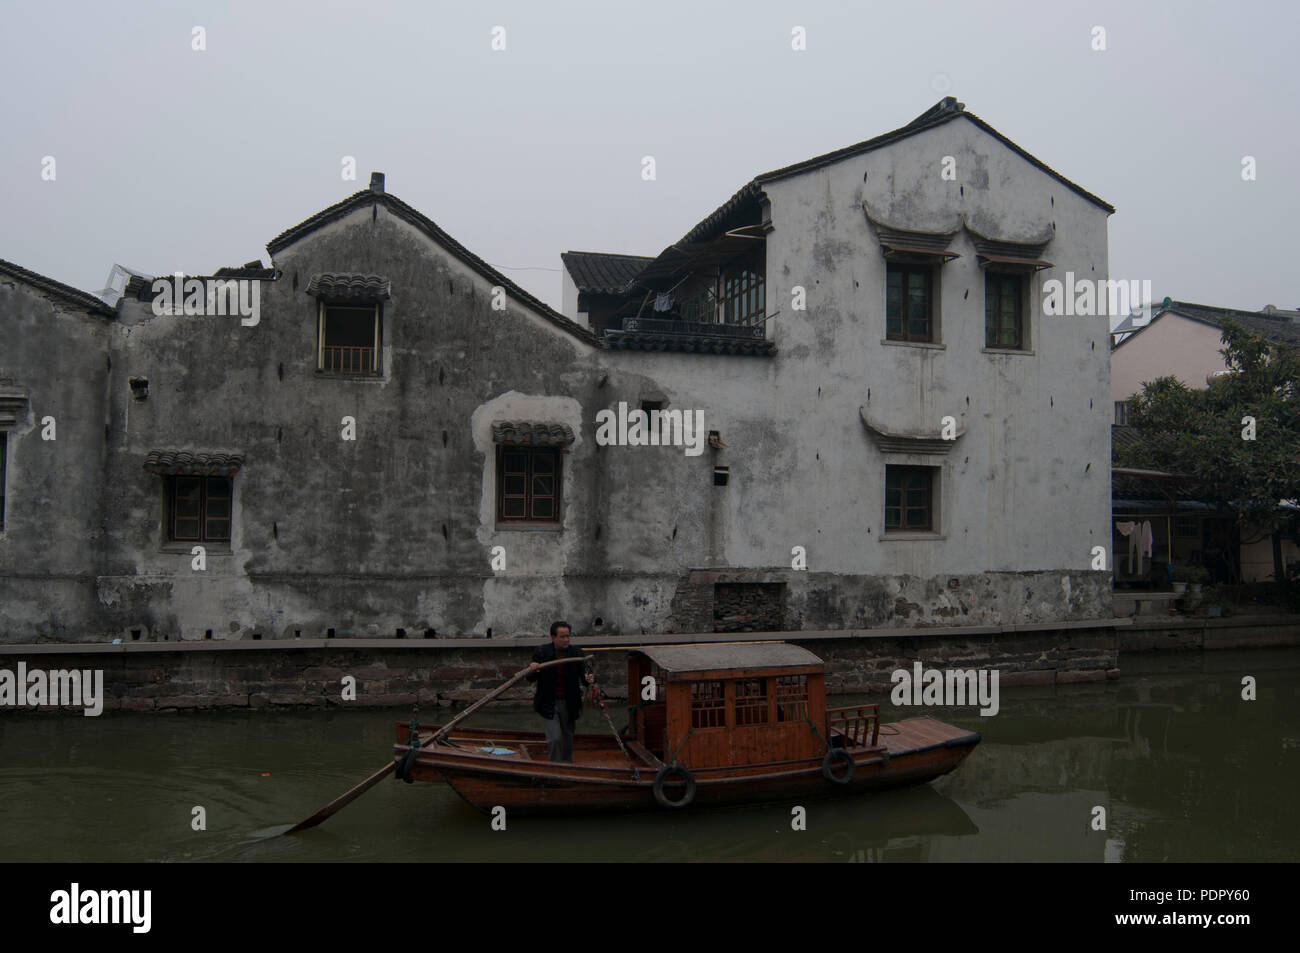 Region of rivers and lakes ，Huizhou housing，China Stock Photo